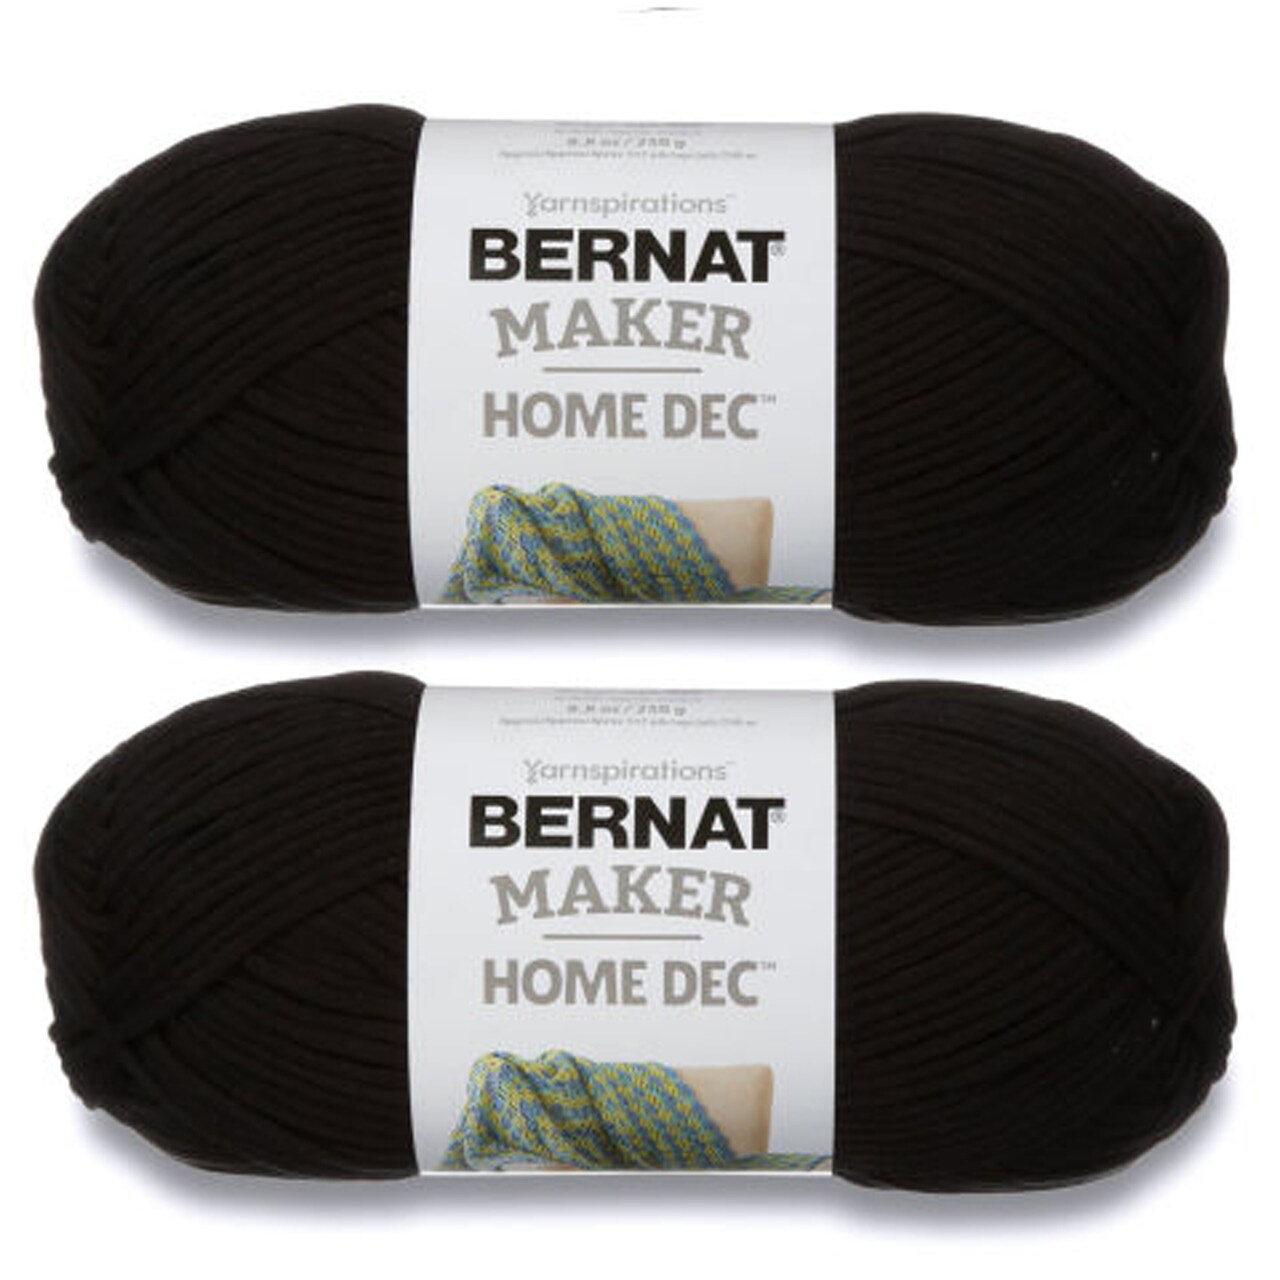 Bernat Maker Home Dec Black Yarn - 2 Pack of 250g/8.8oz - Cotton - 5 Bulky  - 317 Yards - Knitting/Crochet